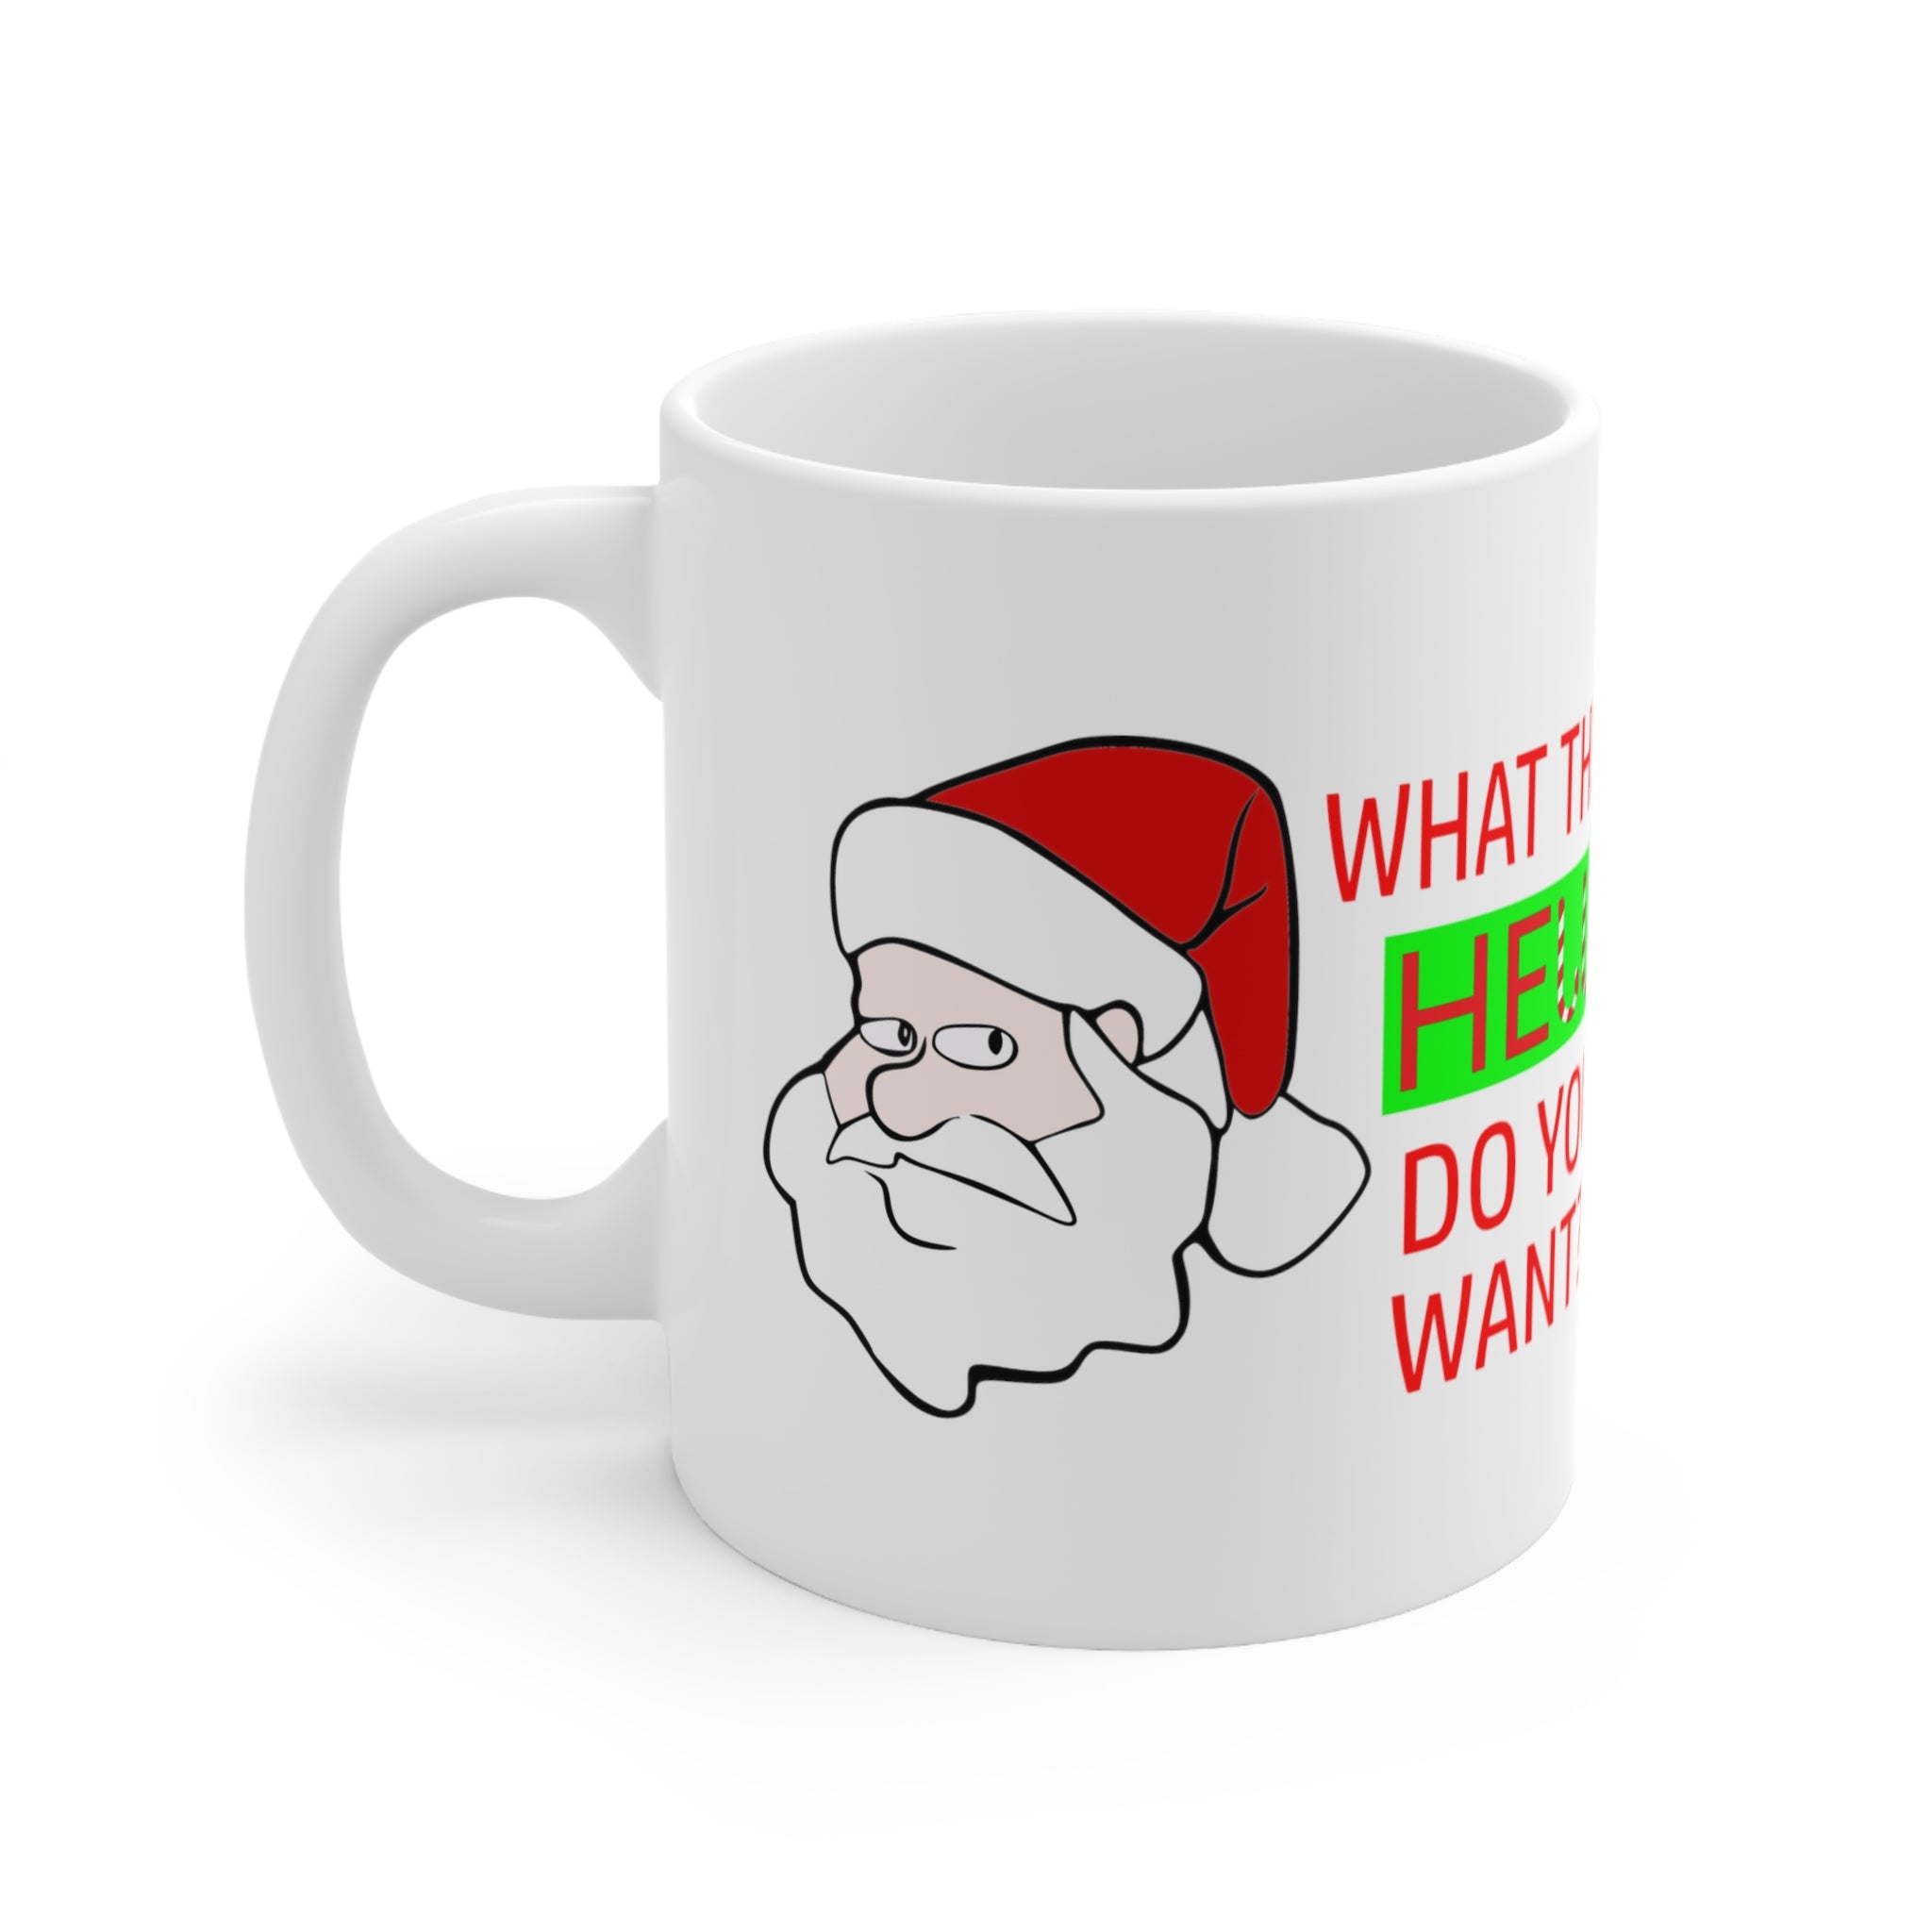 11 oz white ceramic mug featuring an annoyed Santa with the caption 